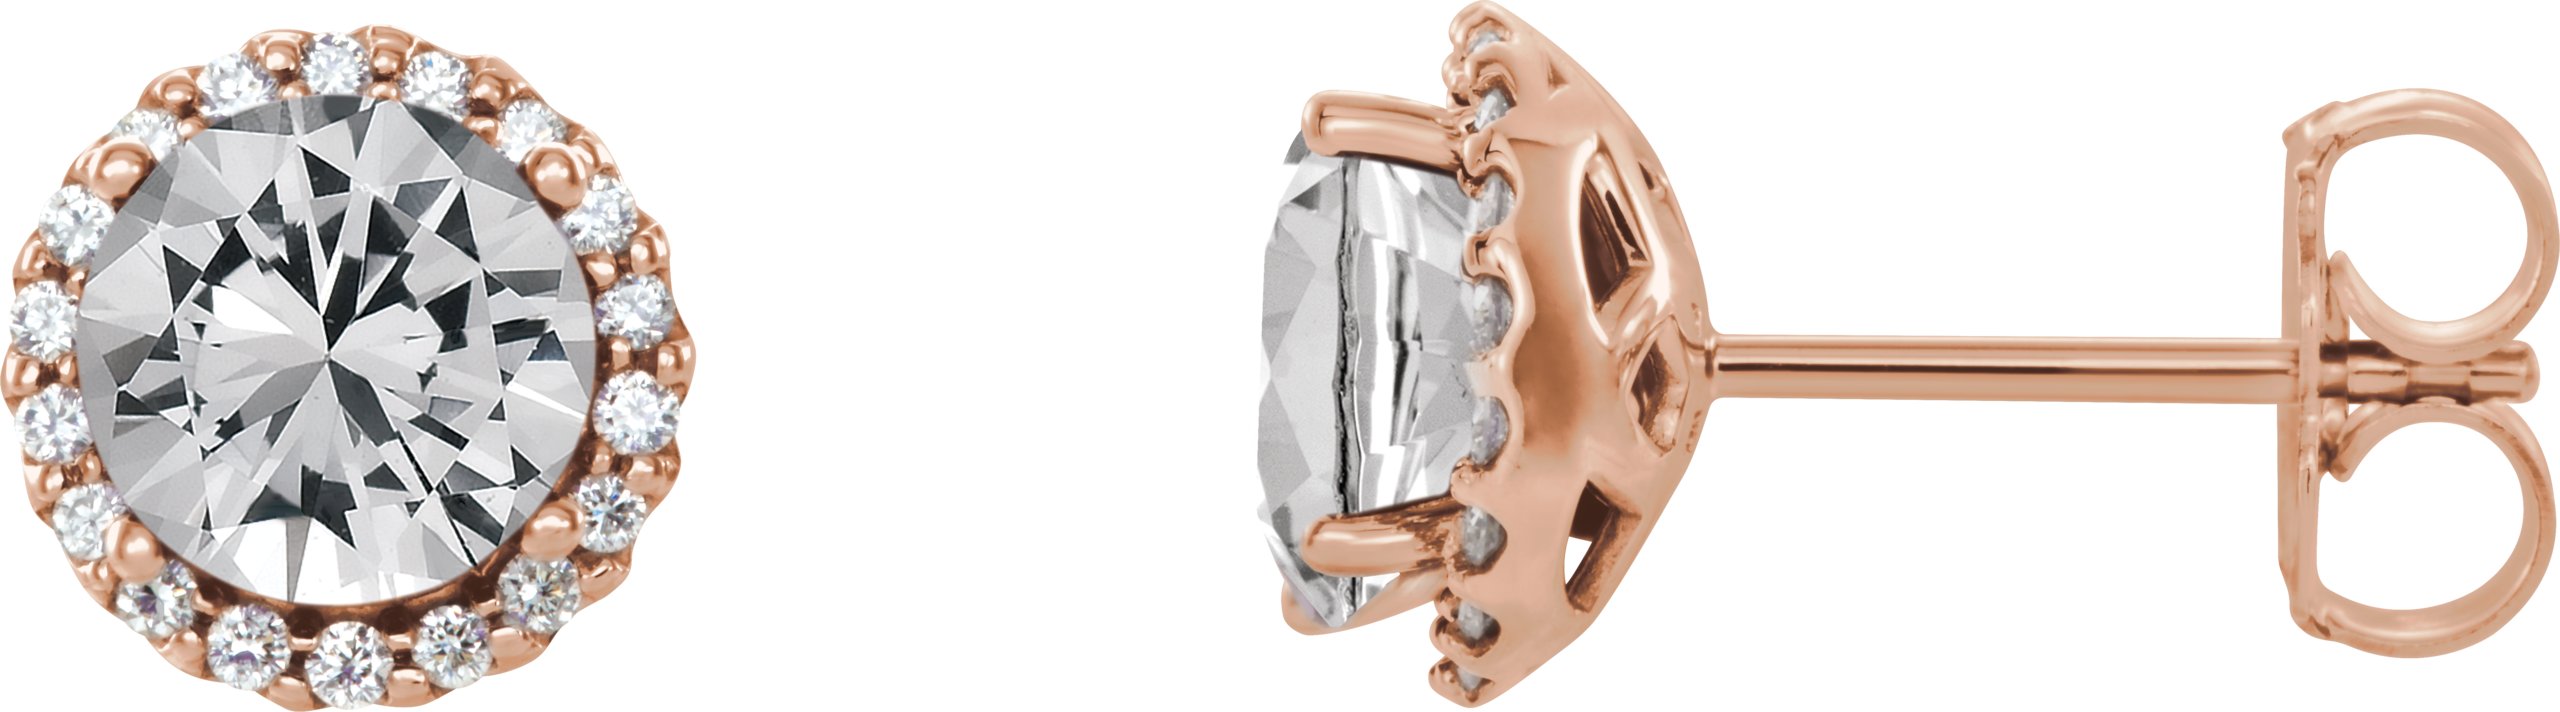 14K Rose 1.33 CTW Diamond Earrings Ref 16635535